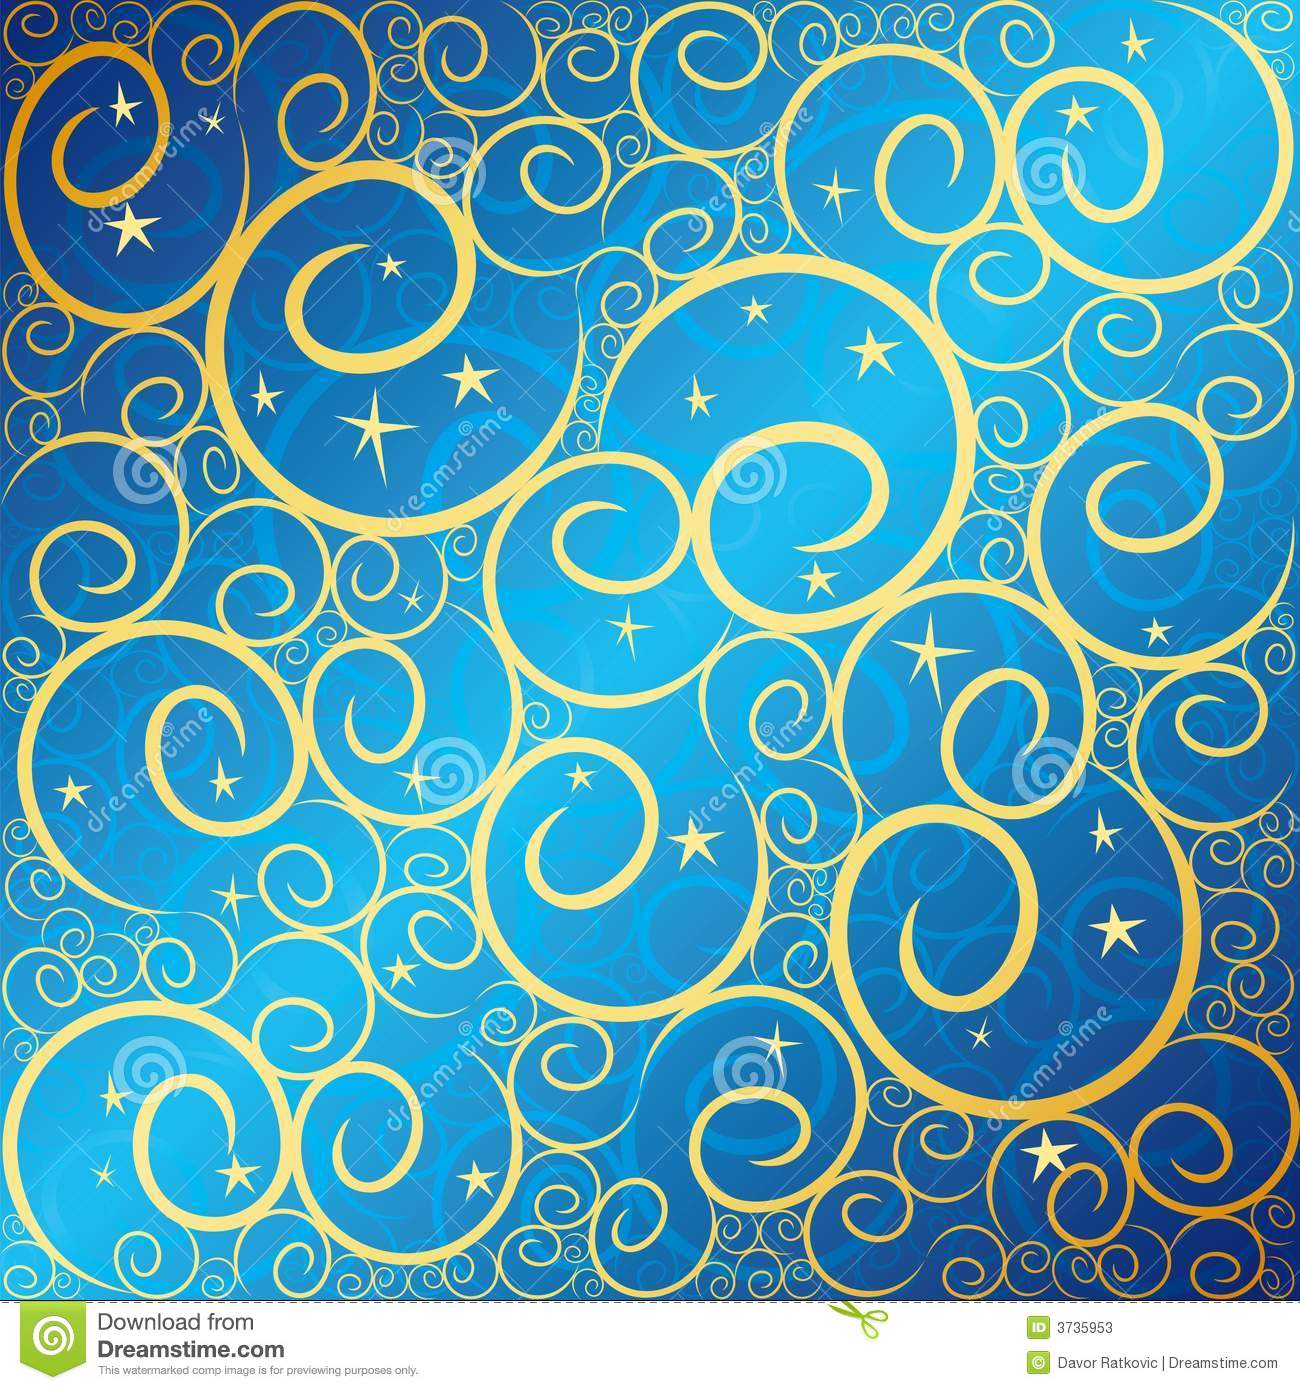 Blue and Gold Swirls